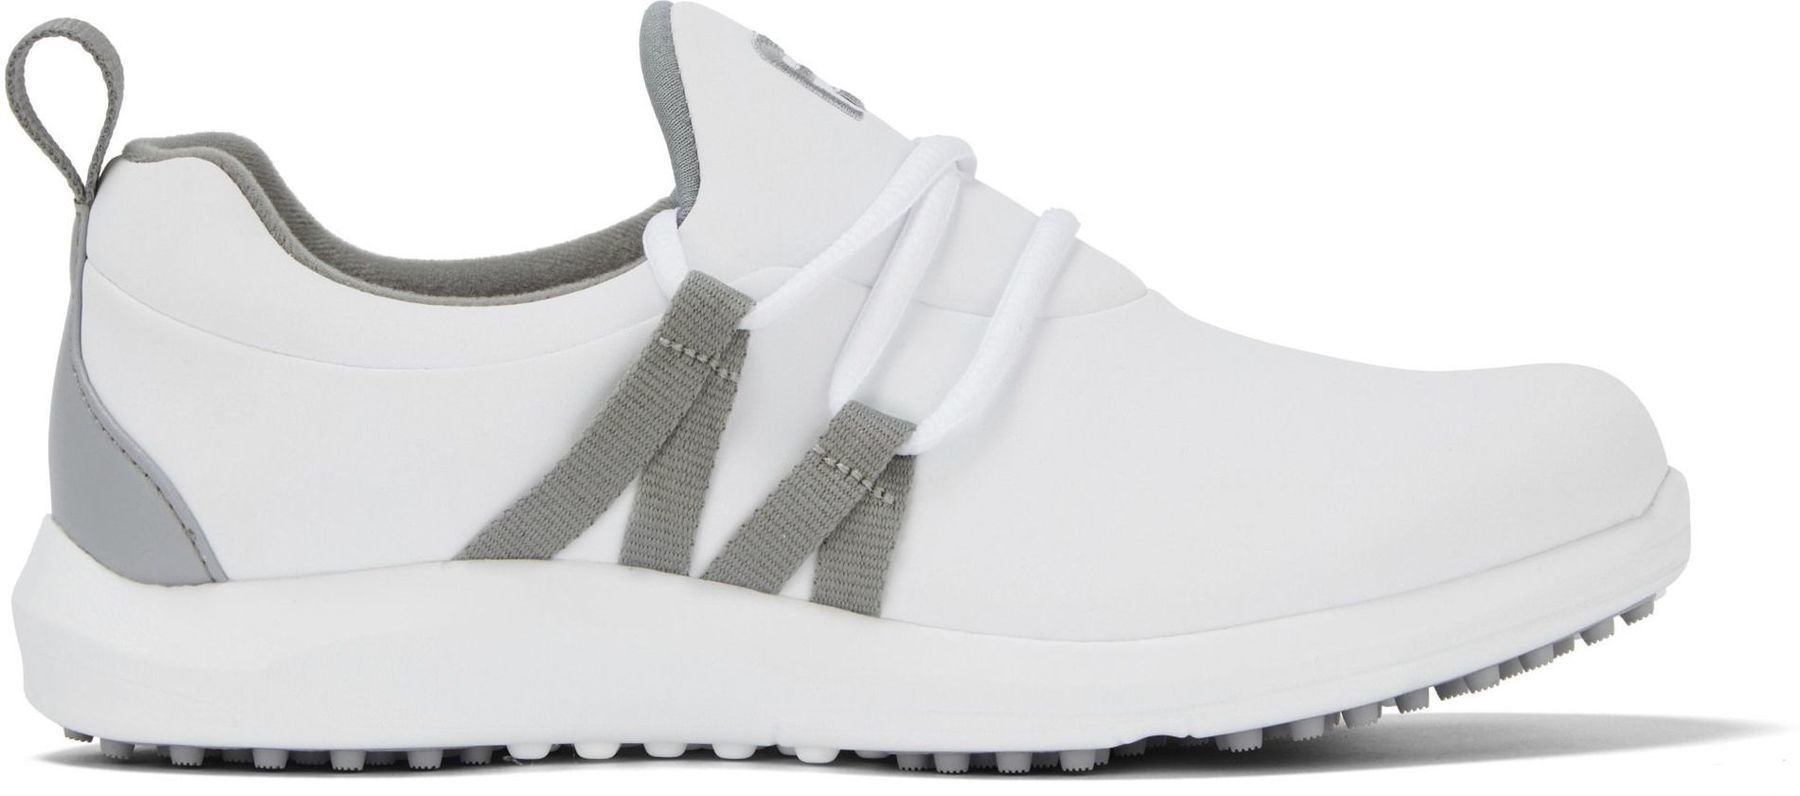 Women's golf shoes Footjoy Leisure Slip On White/Grey 39